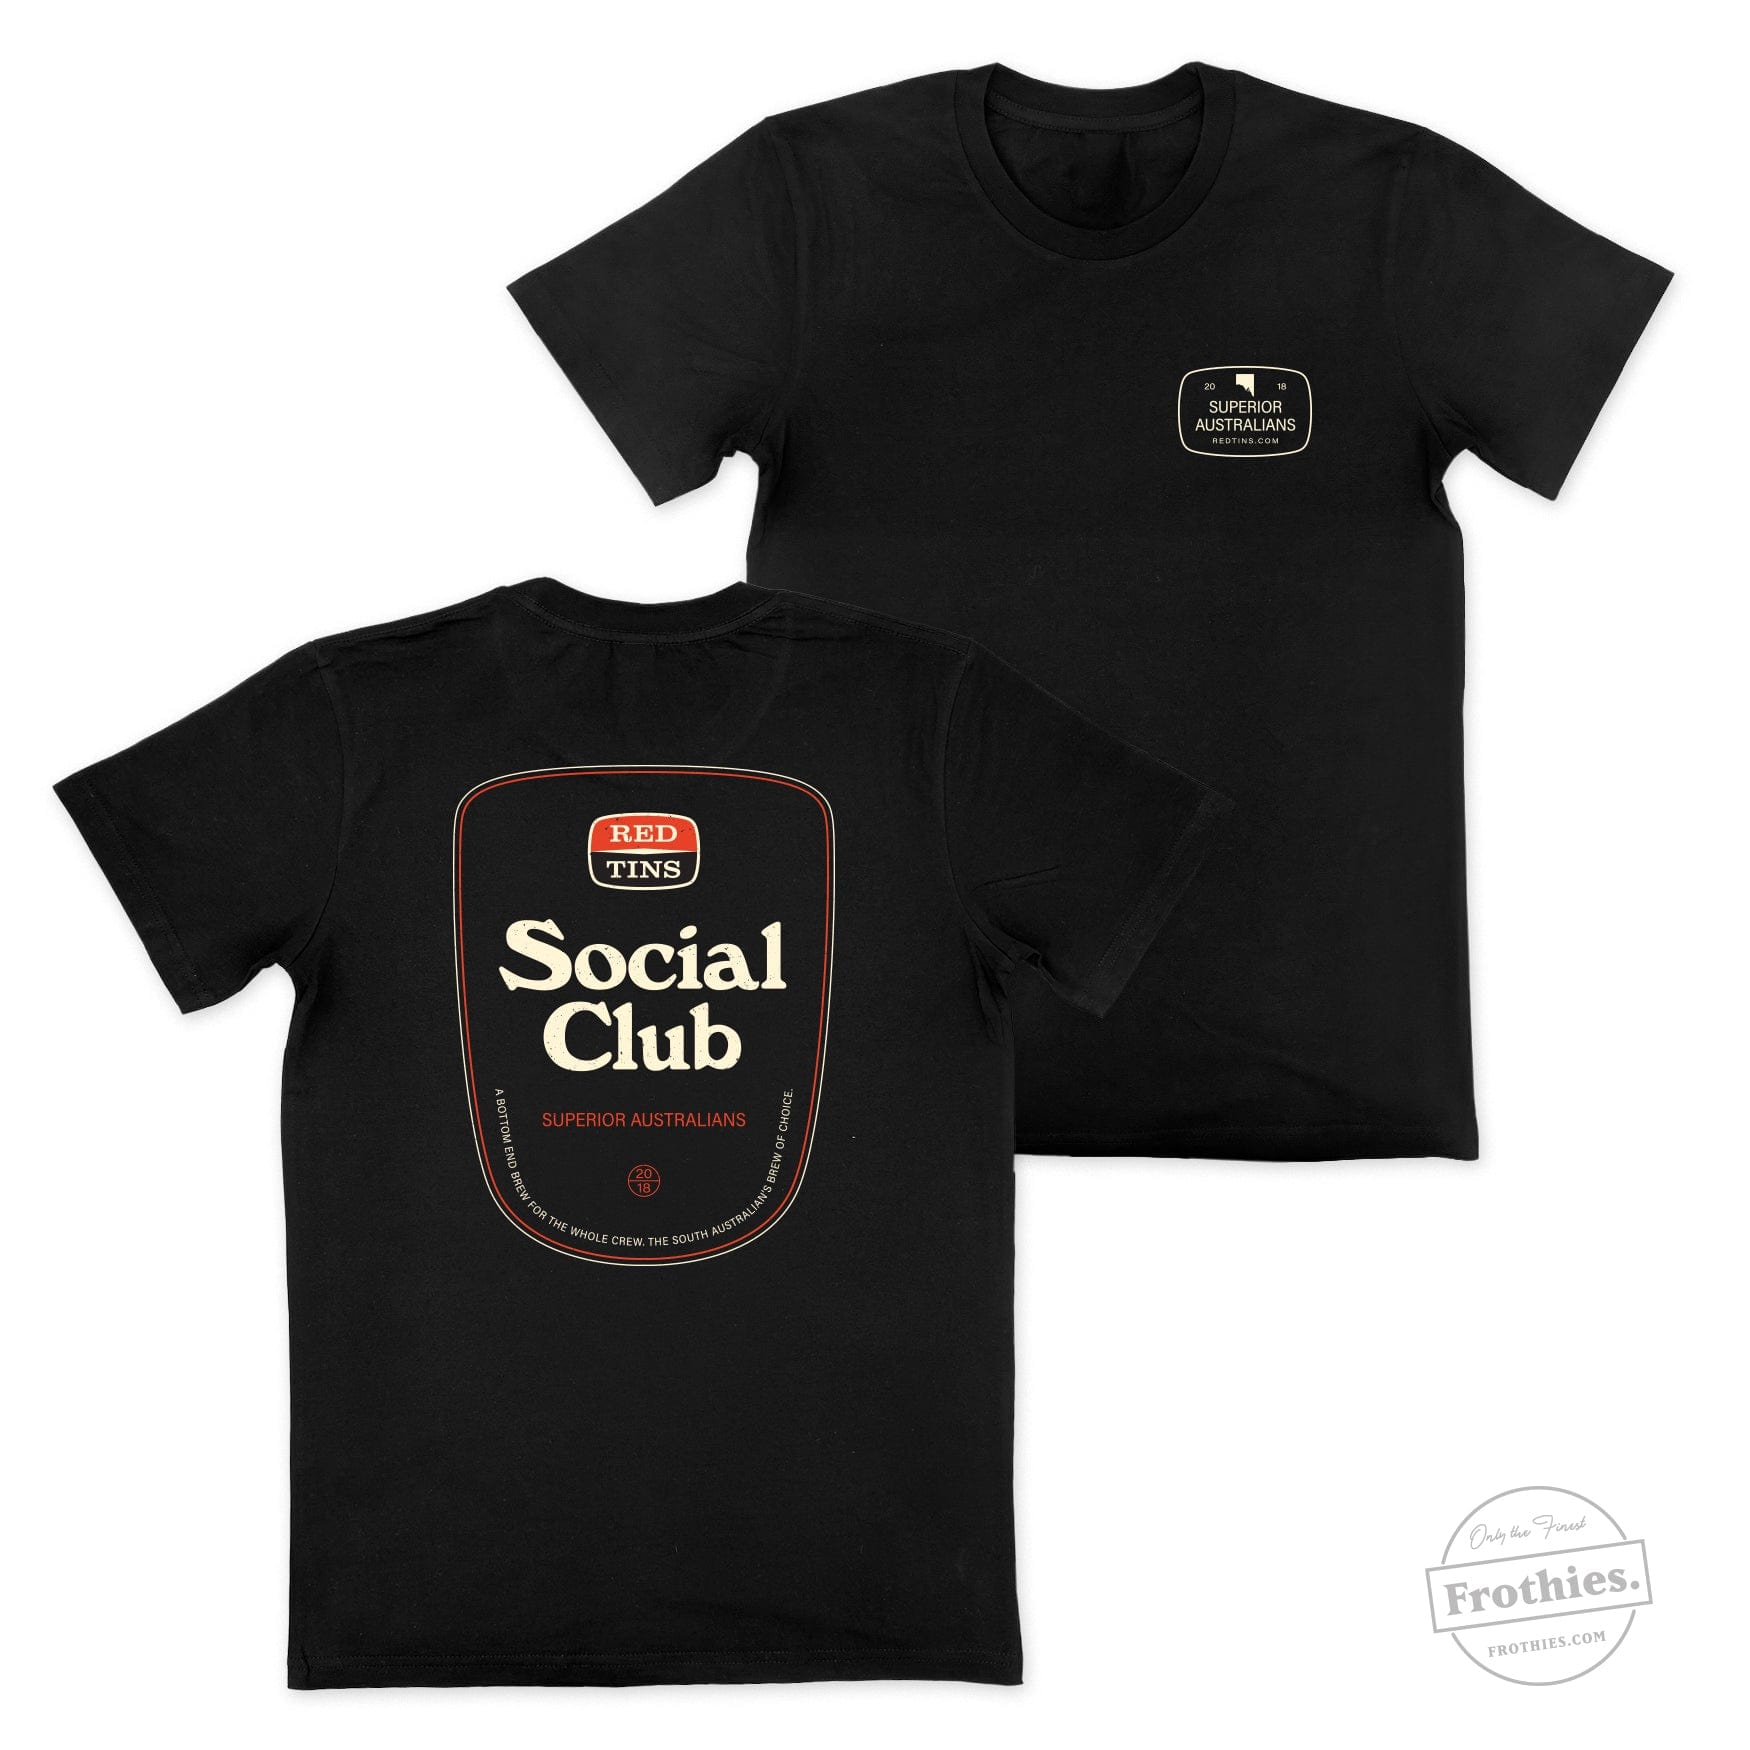 The Social Club Tee T-Shirt Red Tins